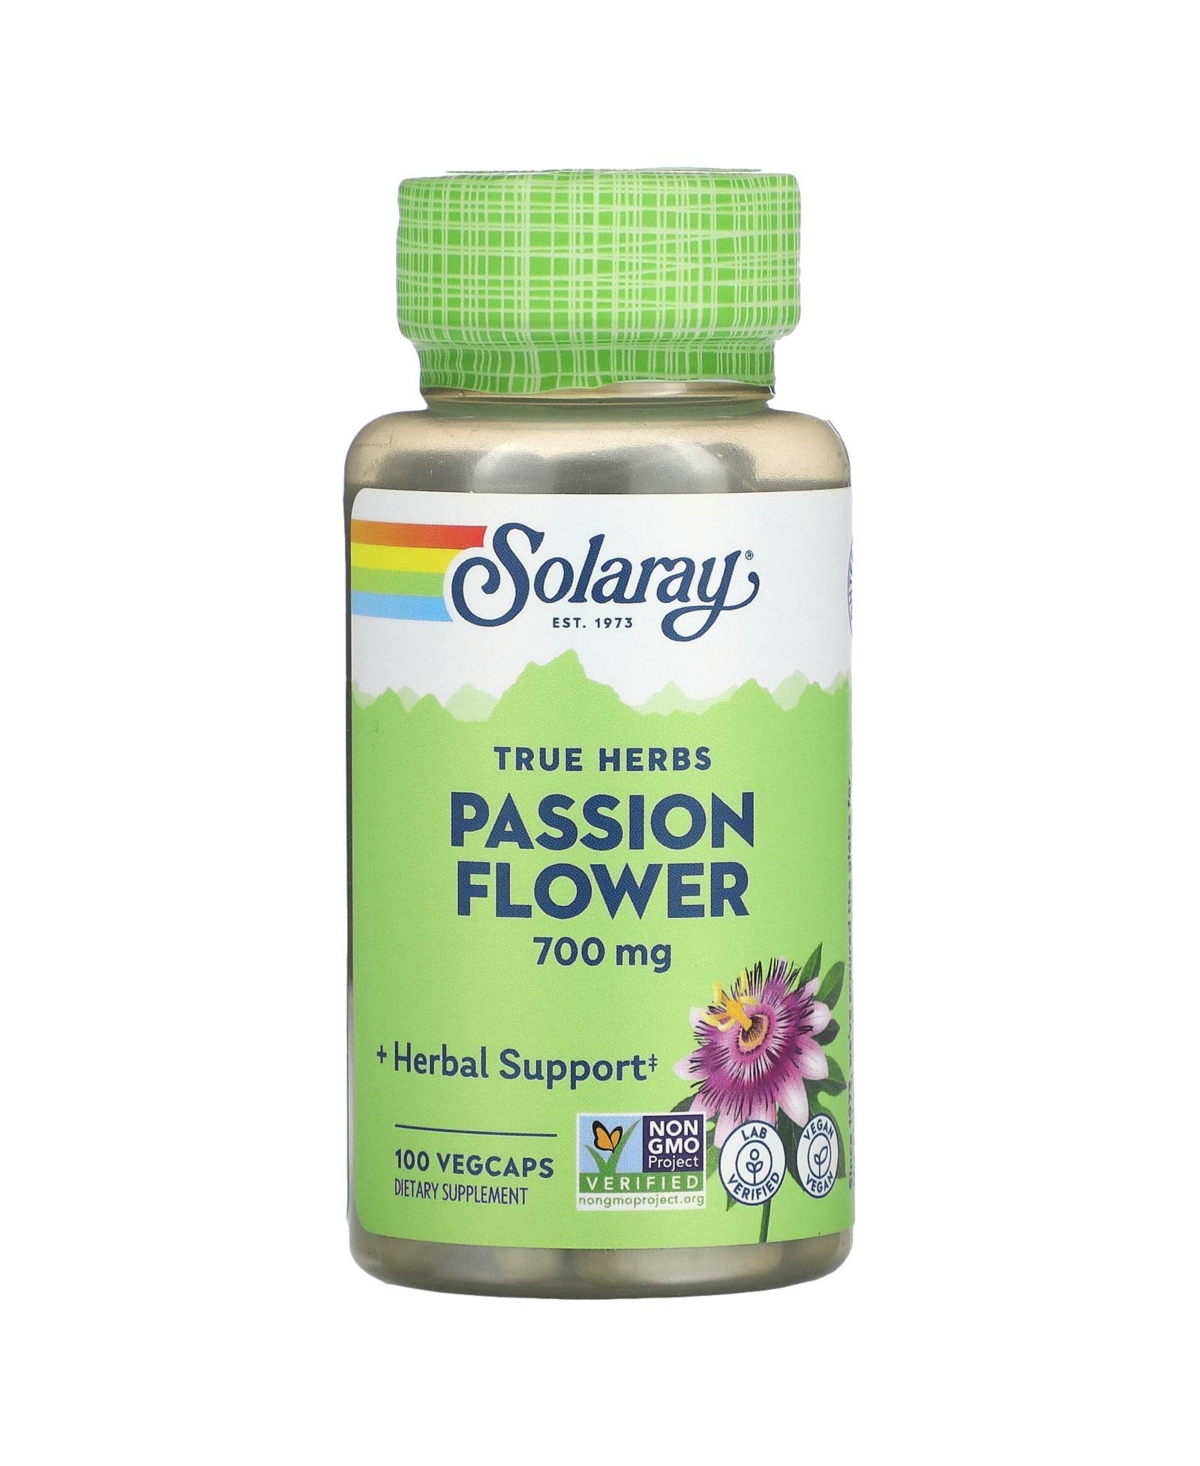 True Herbs Passion Flower 700 mg - 100 Veg Caps (350 mg per Capsule) - Assorted Pre-Pack